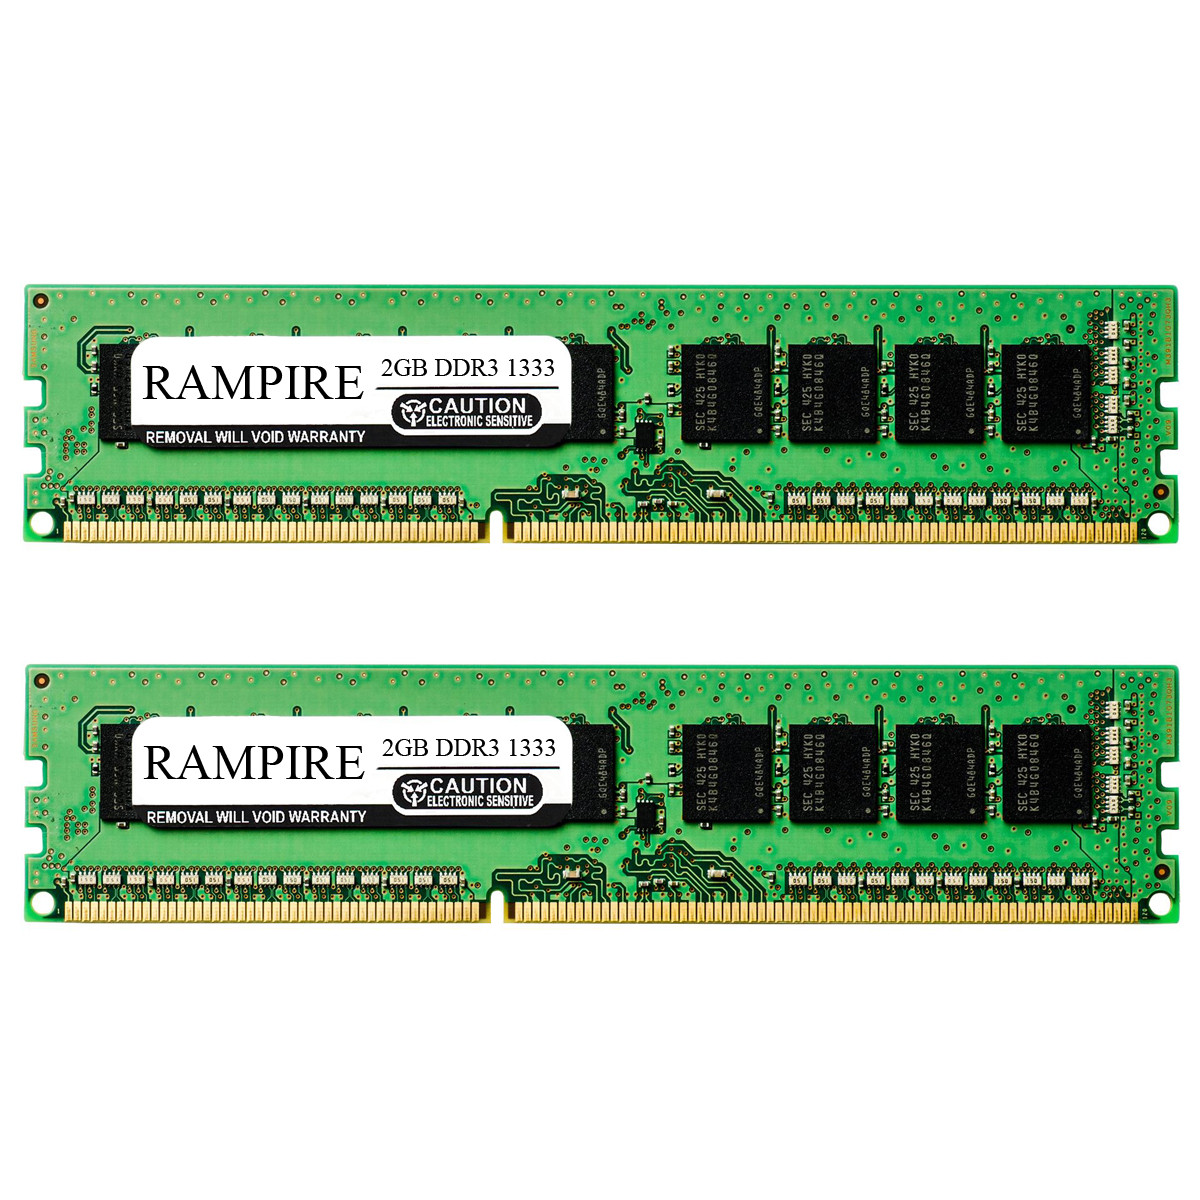 RAMPIRE 4GB (2 x 2GB) DDR3 1333 (PC3 10600) 240-Pin DDR3 SDRAM 1.5V 2Rx8 Non-ECC UDIMM Memory for Desktop PC